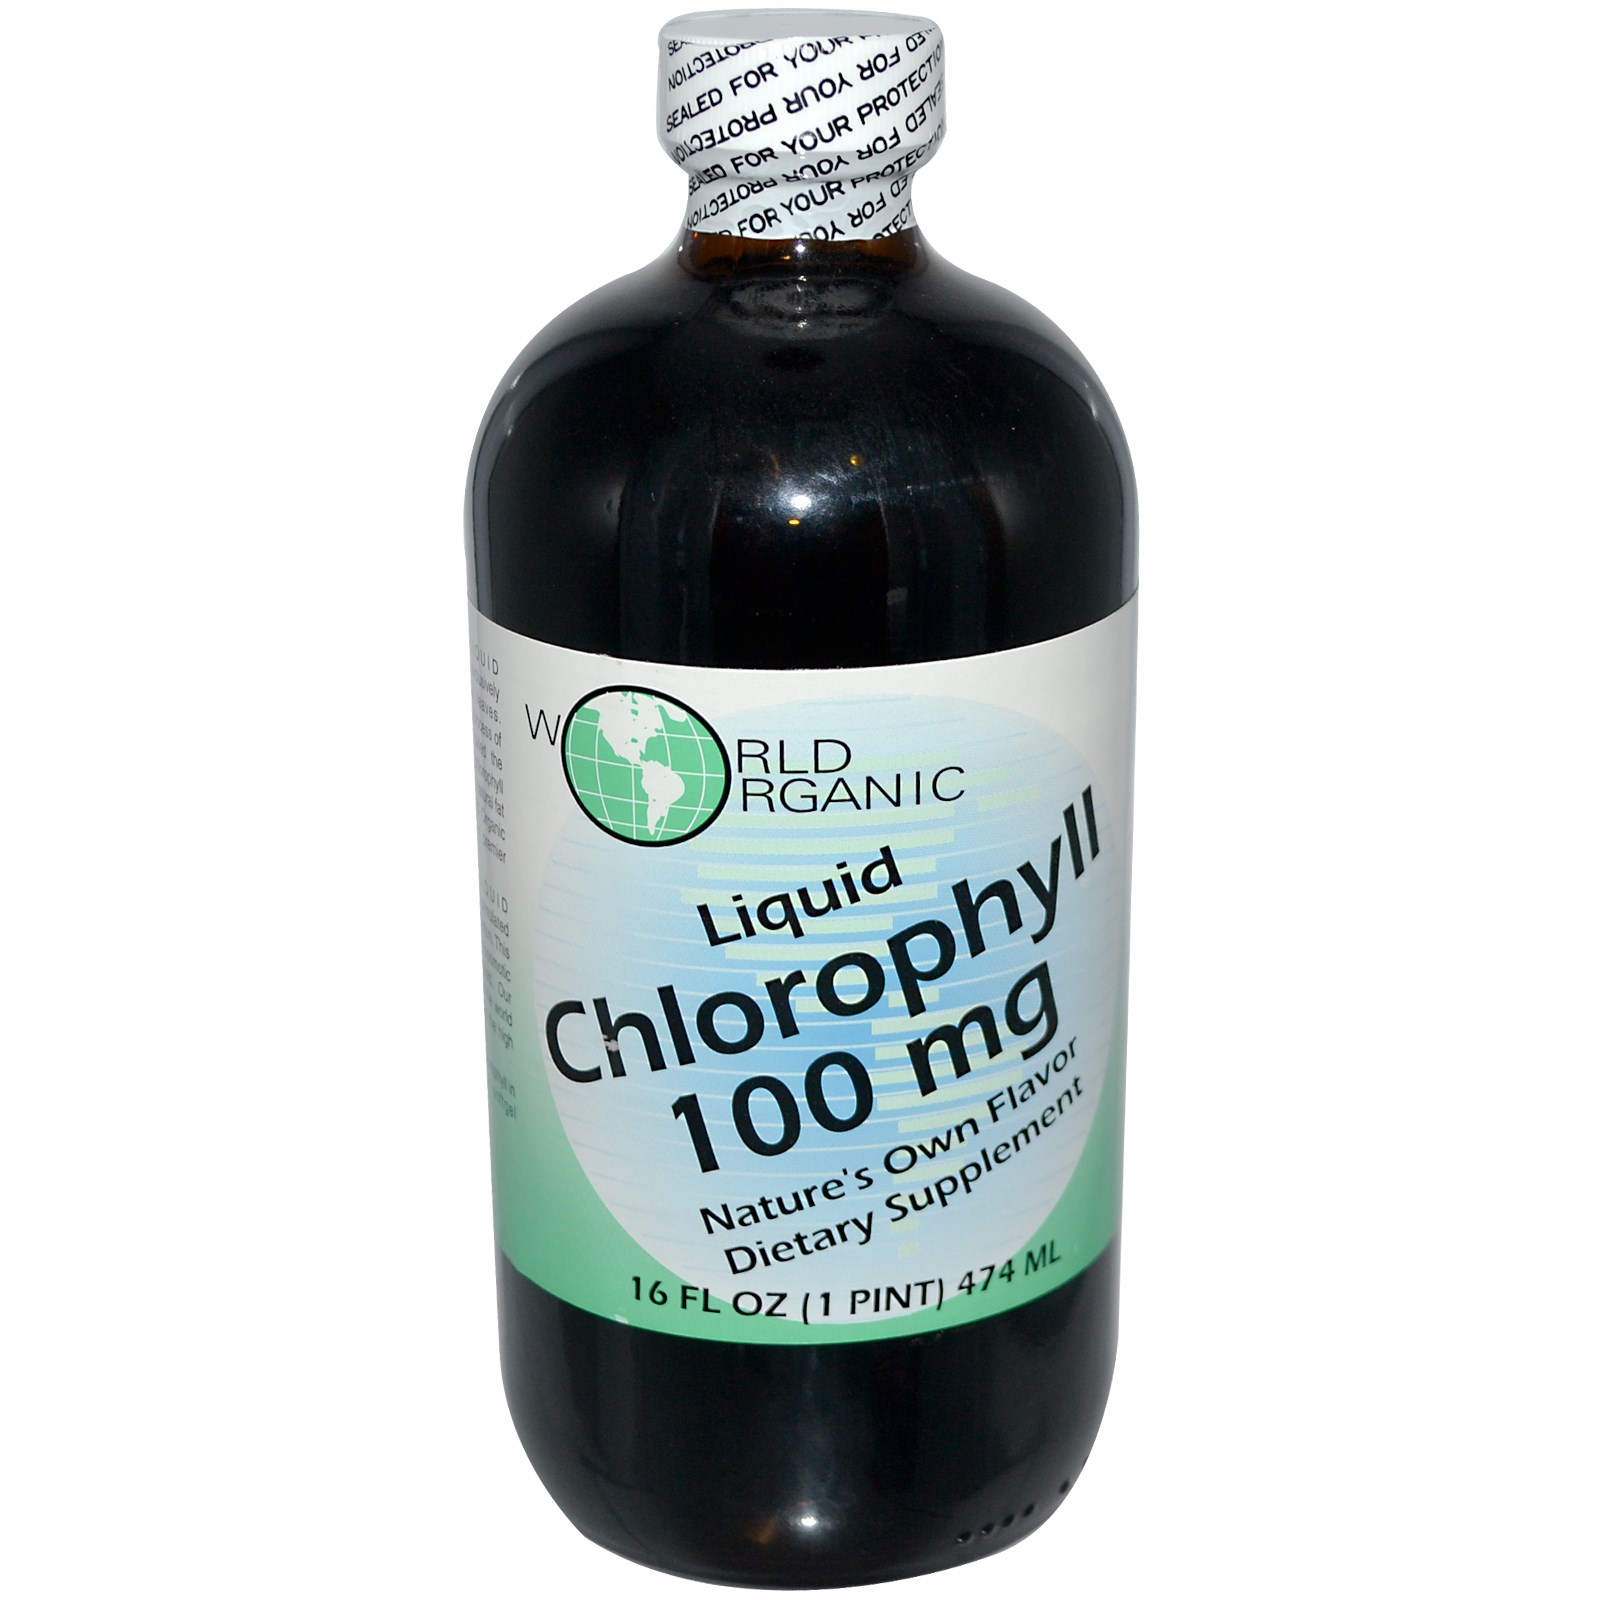 World Organics Liquid Chlorophyll for sale at High Vibe NYC